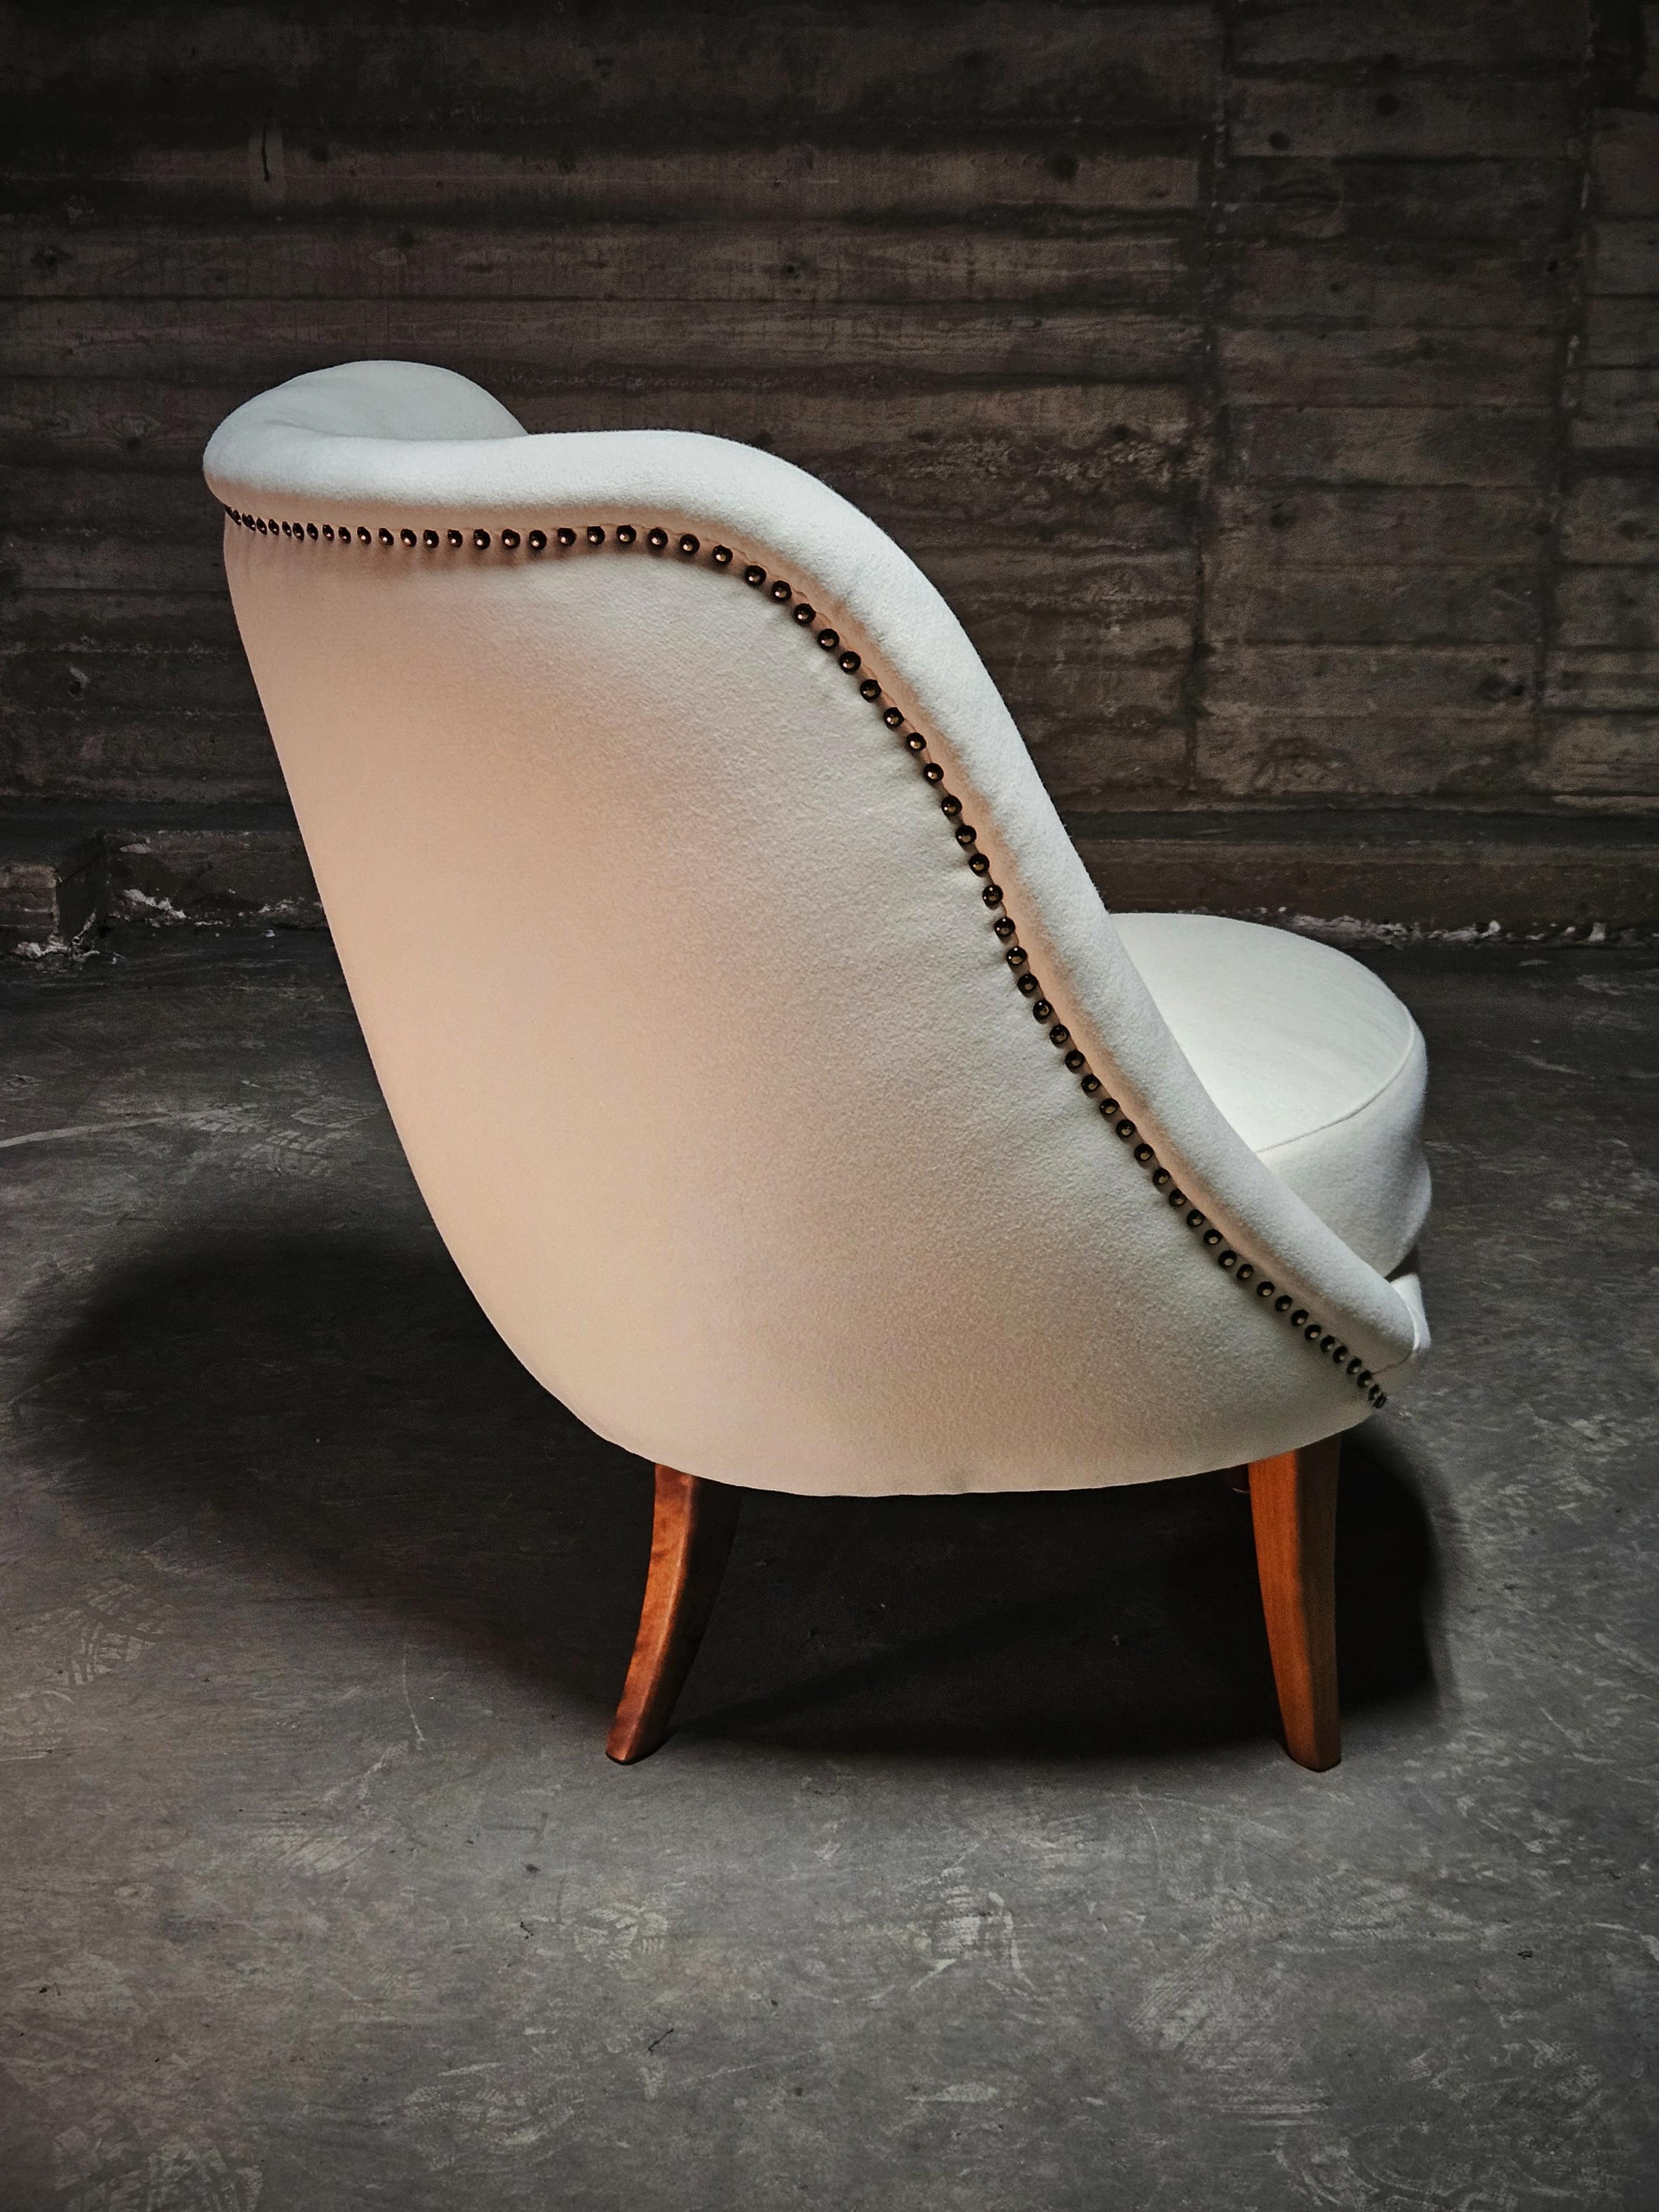 20th Century Scandinavian modern asymmetrical lounge chair by Arne Norell, Sweden, 1950s For Sale